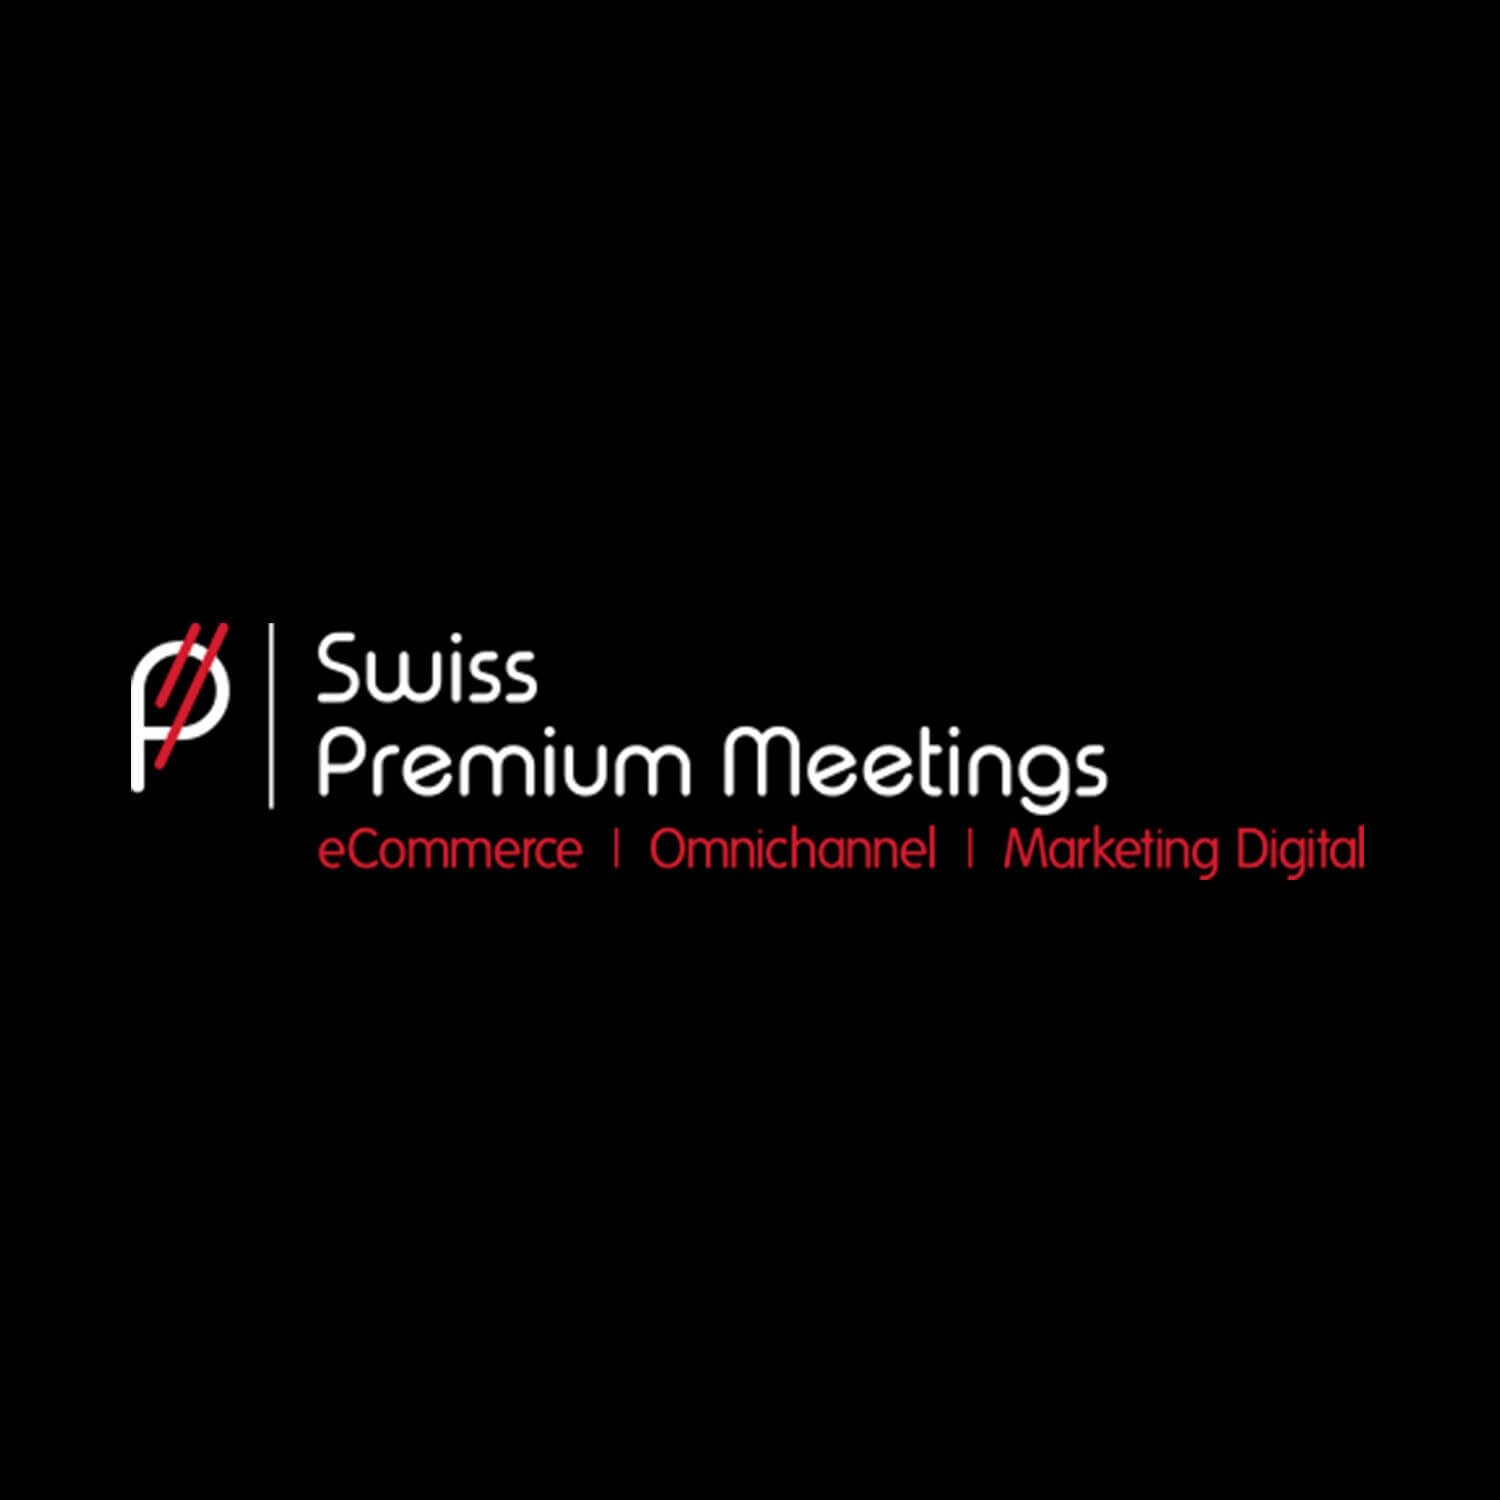 Swiss Premium Meetings